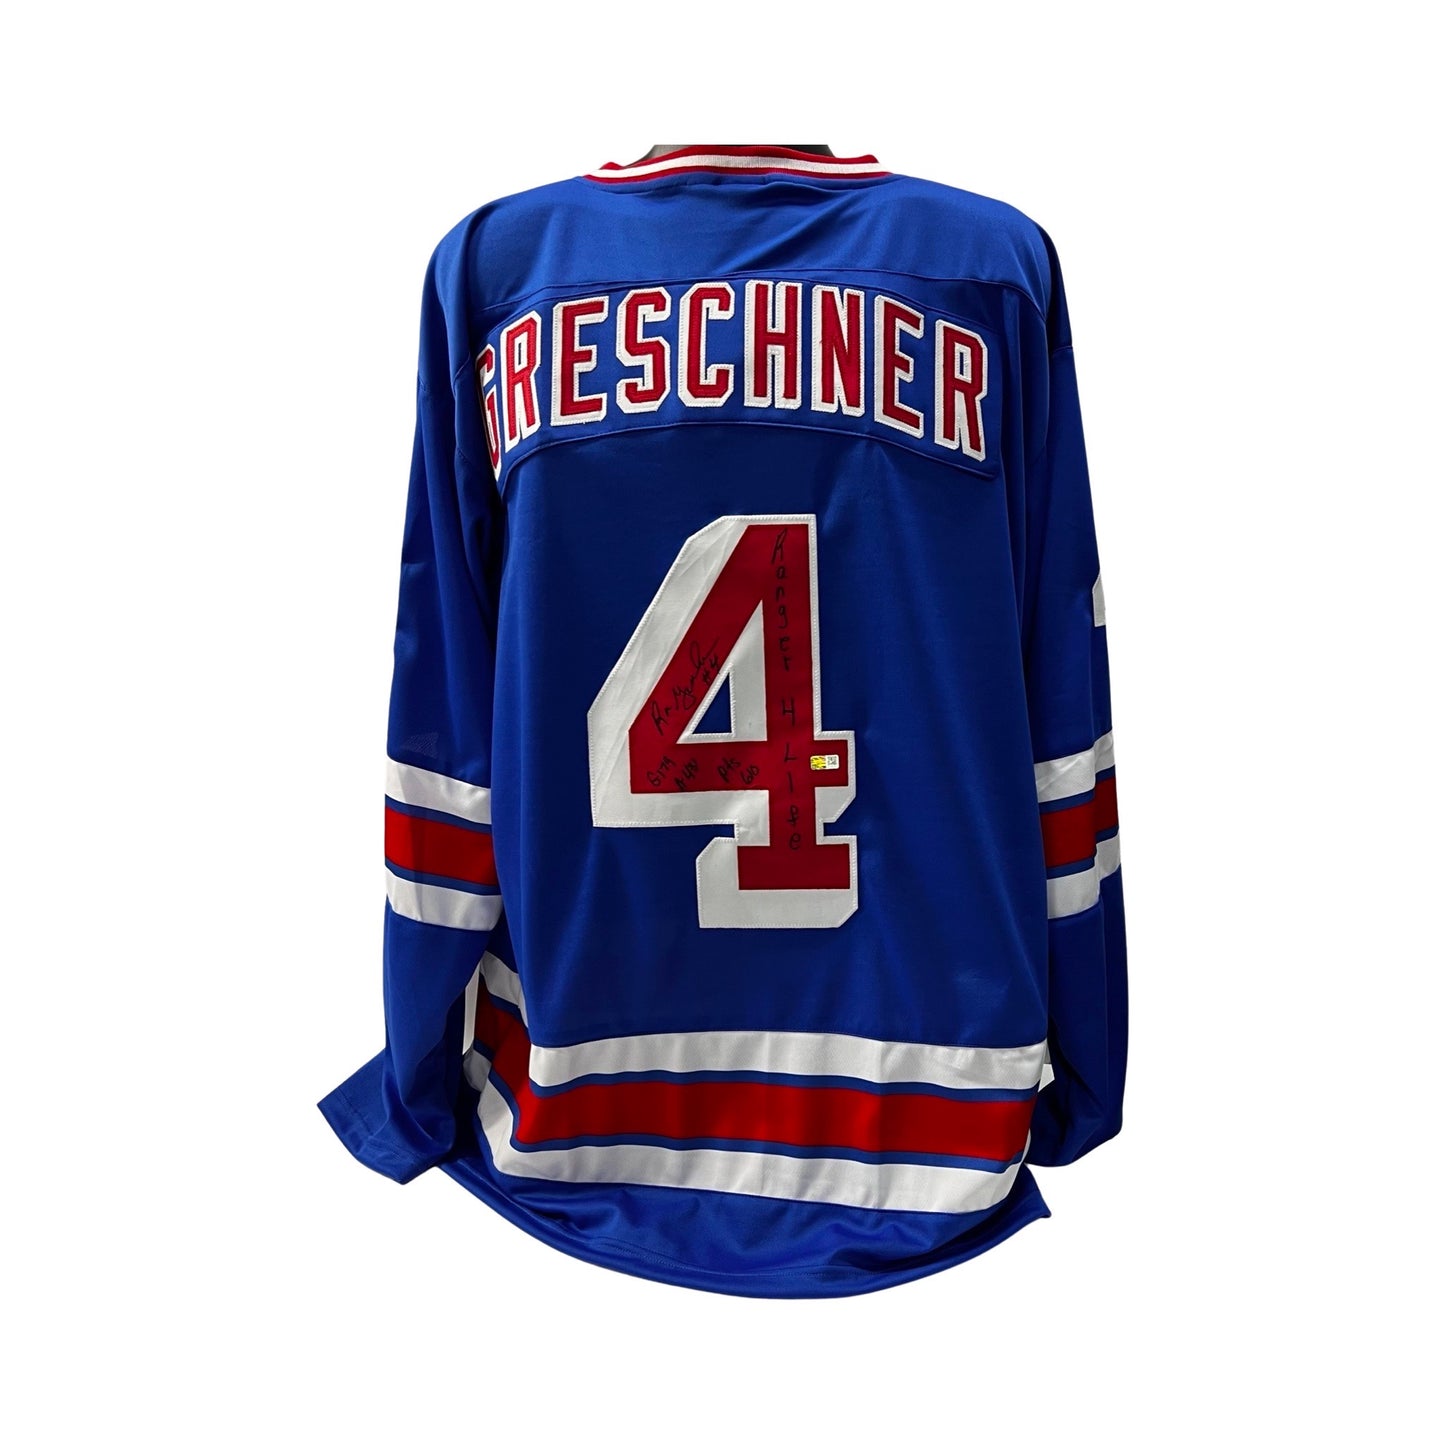 Ron Greschner Autographed New York Rangers Blue Jersey “Ranger 4 Life, G-179, A-431, Pts-610” Inscriptions Steiner CX